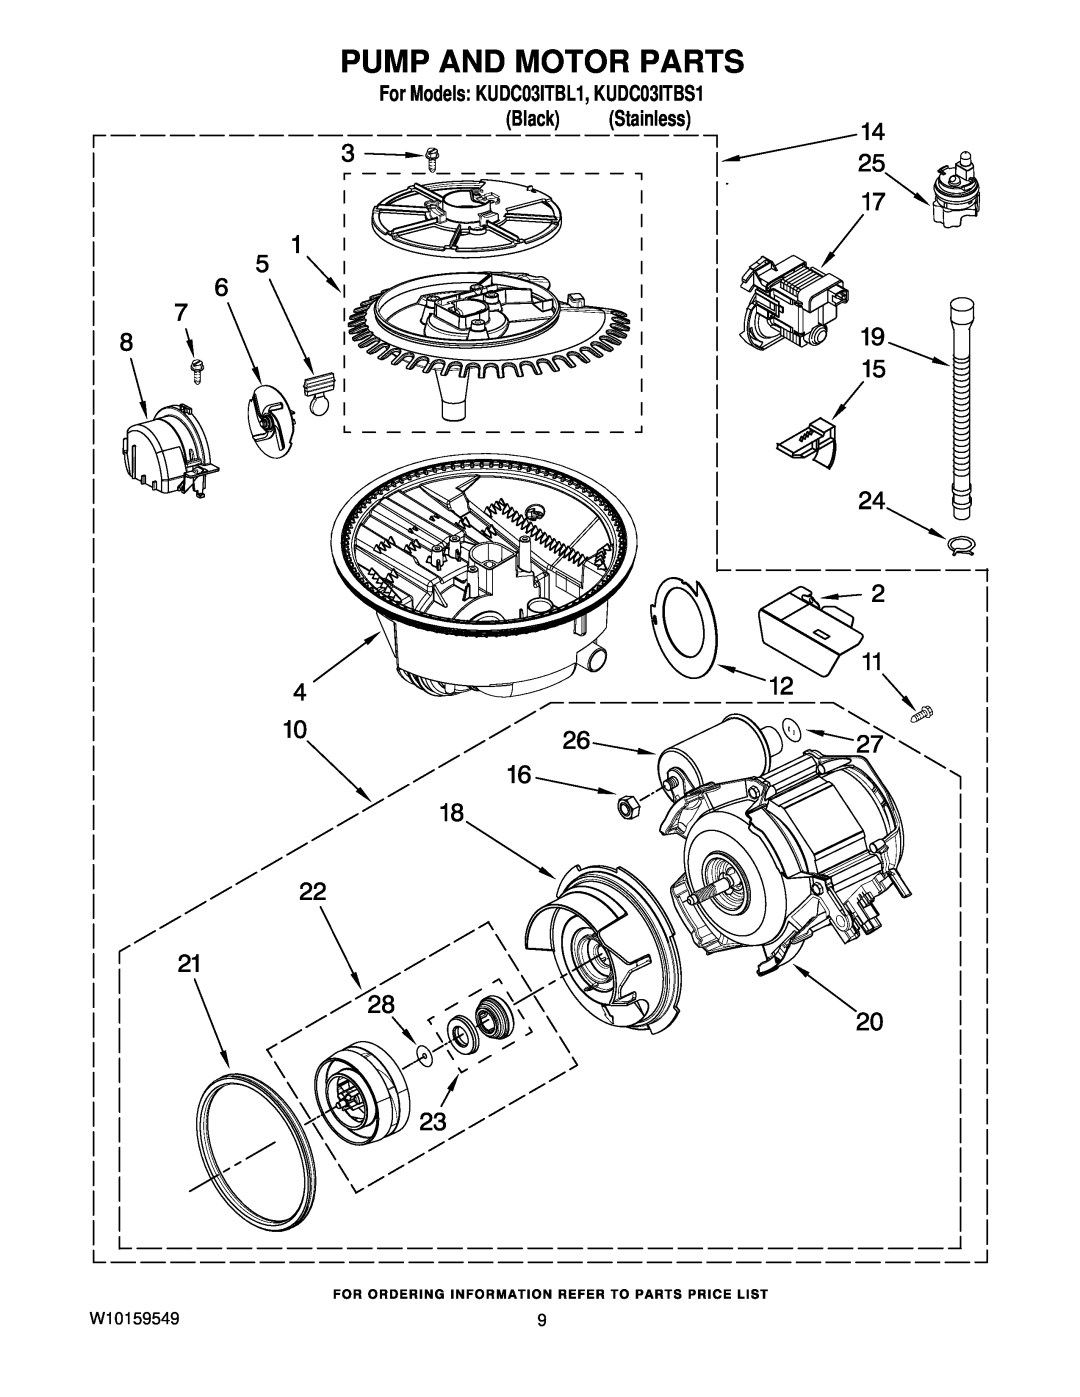 KitchenAid manual Pump And Motor Parts, For Models KUDC03ITBL1, KUDC03ITBS1 Black Stainless 